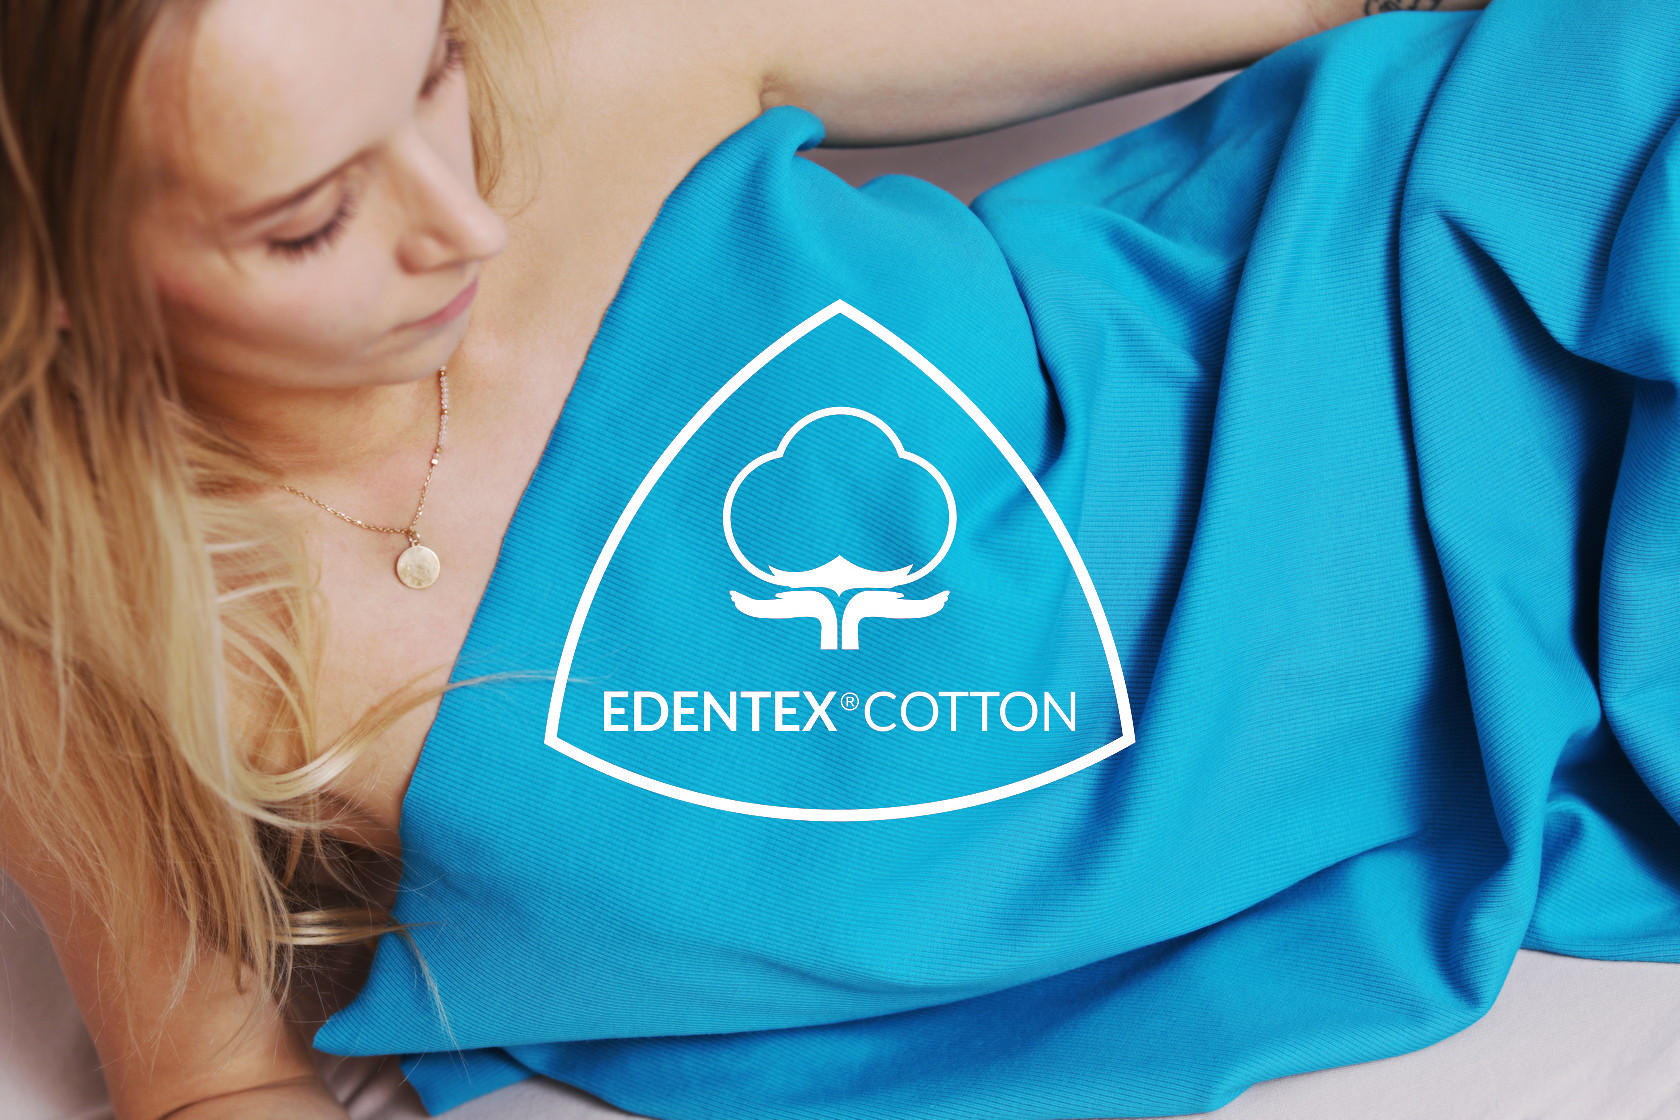 EDENTEX® knitted jersey fabrics / We Love Cotton! 